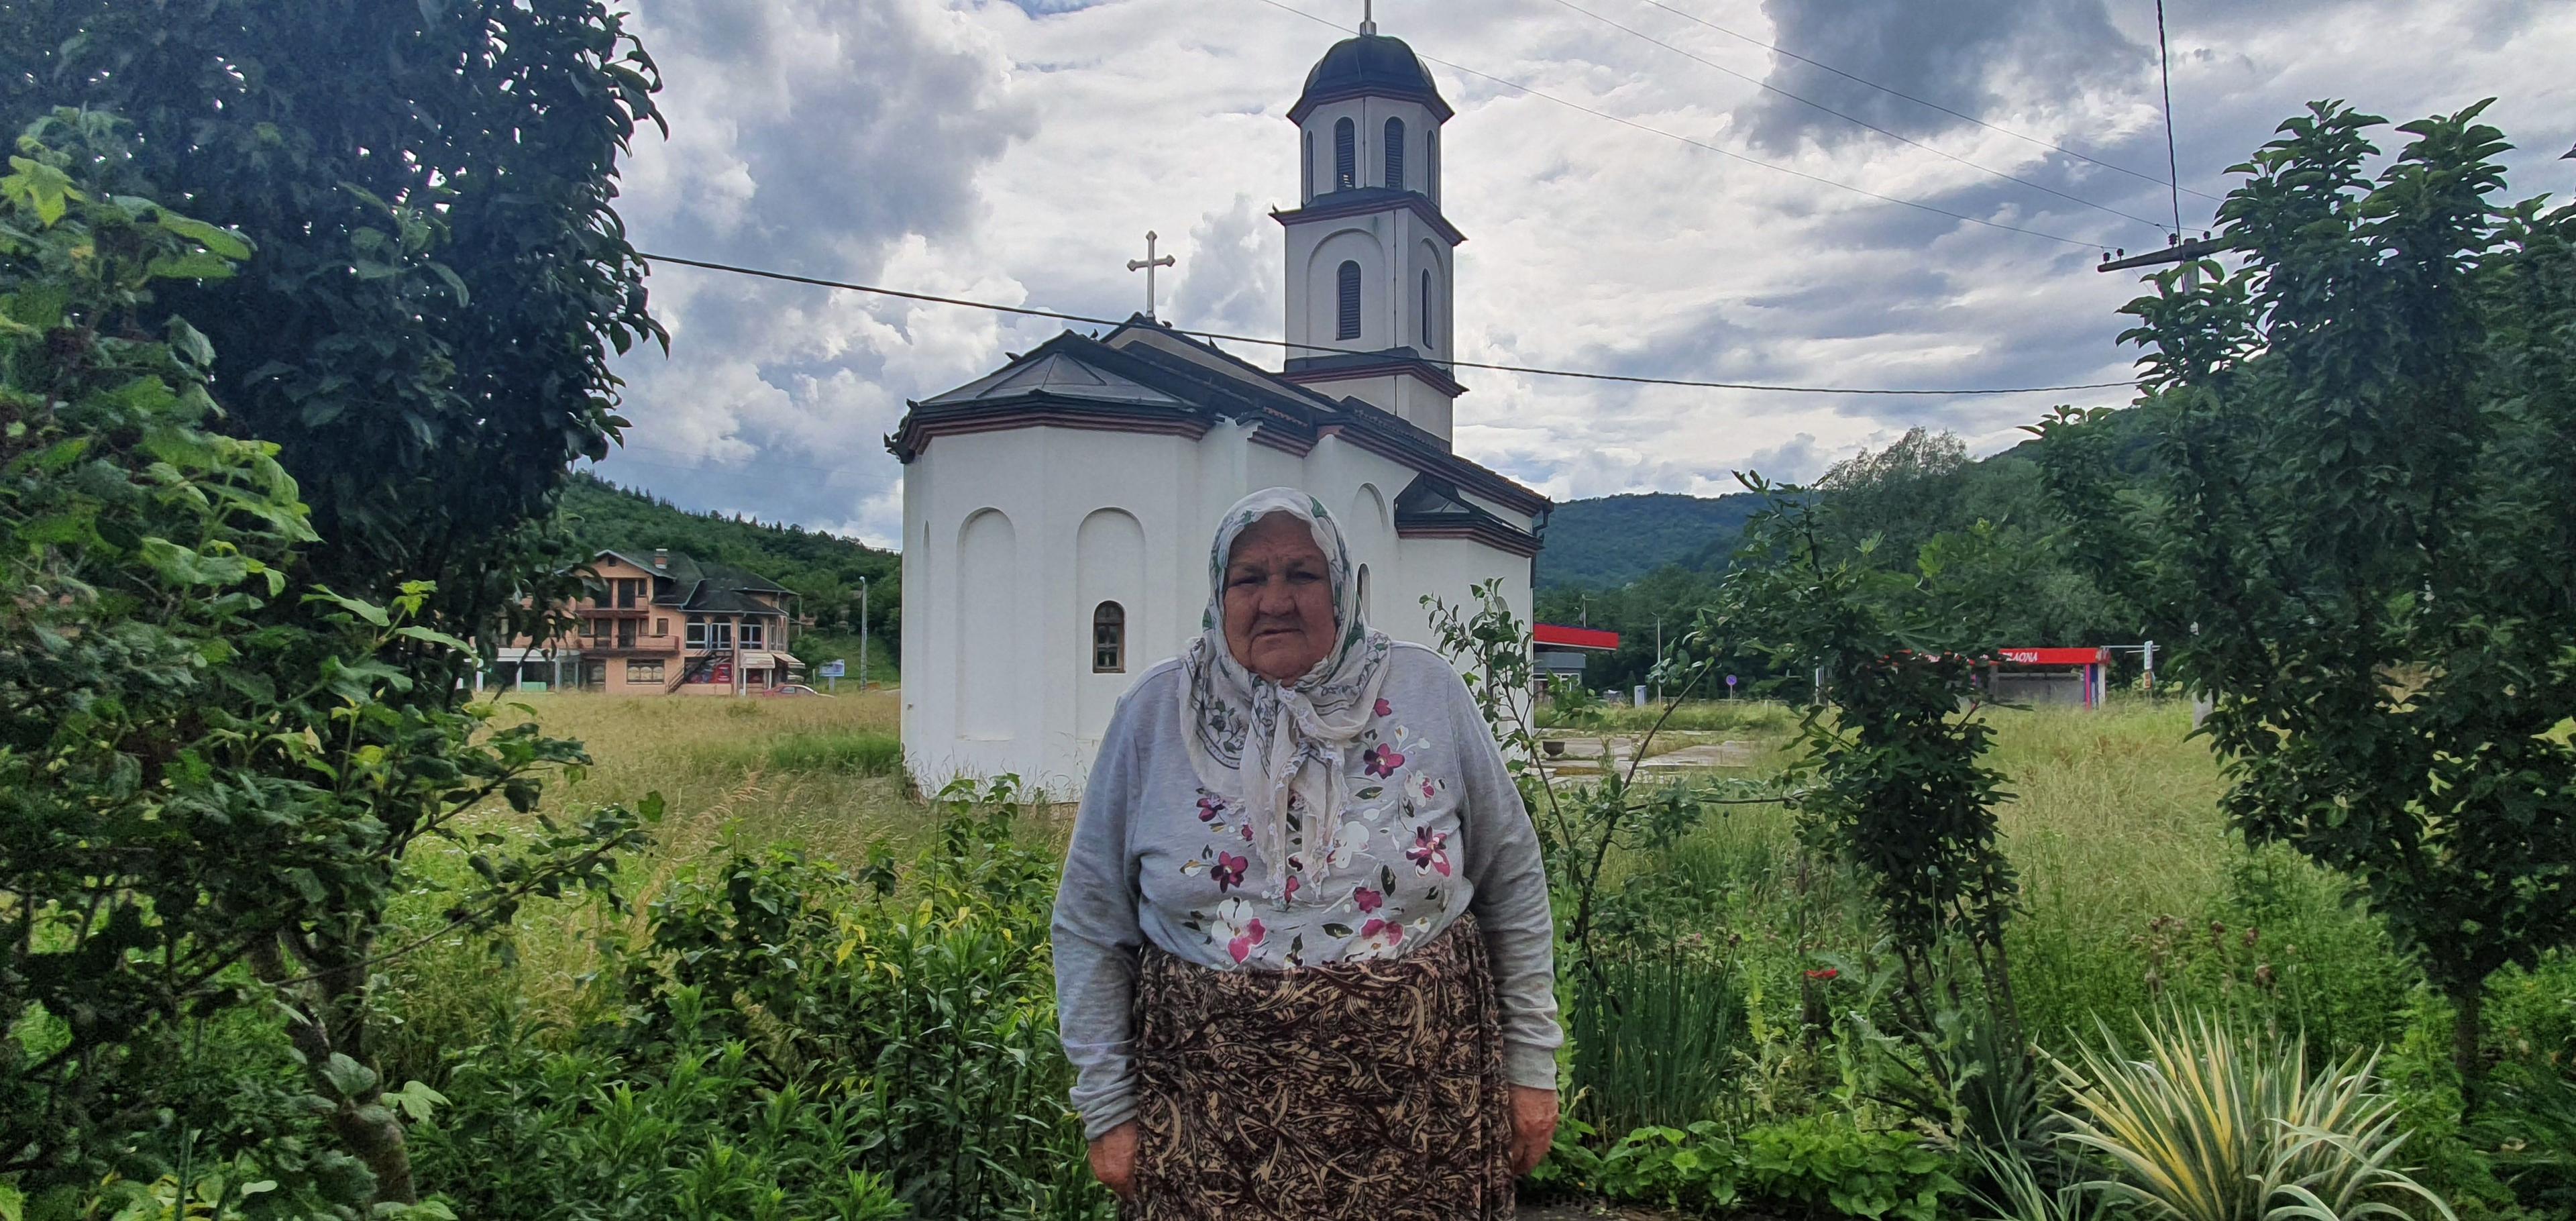 Fata Orlović in front of the church in her yard - Avaz